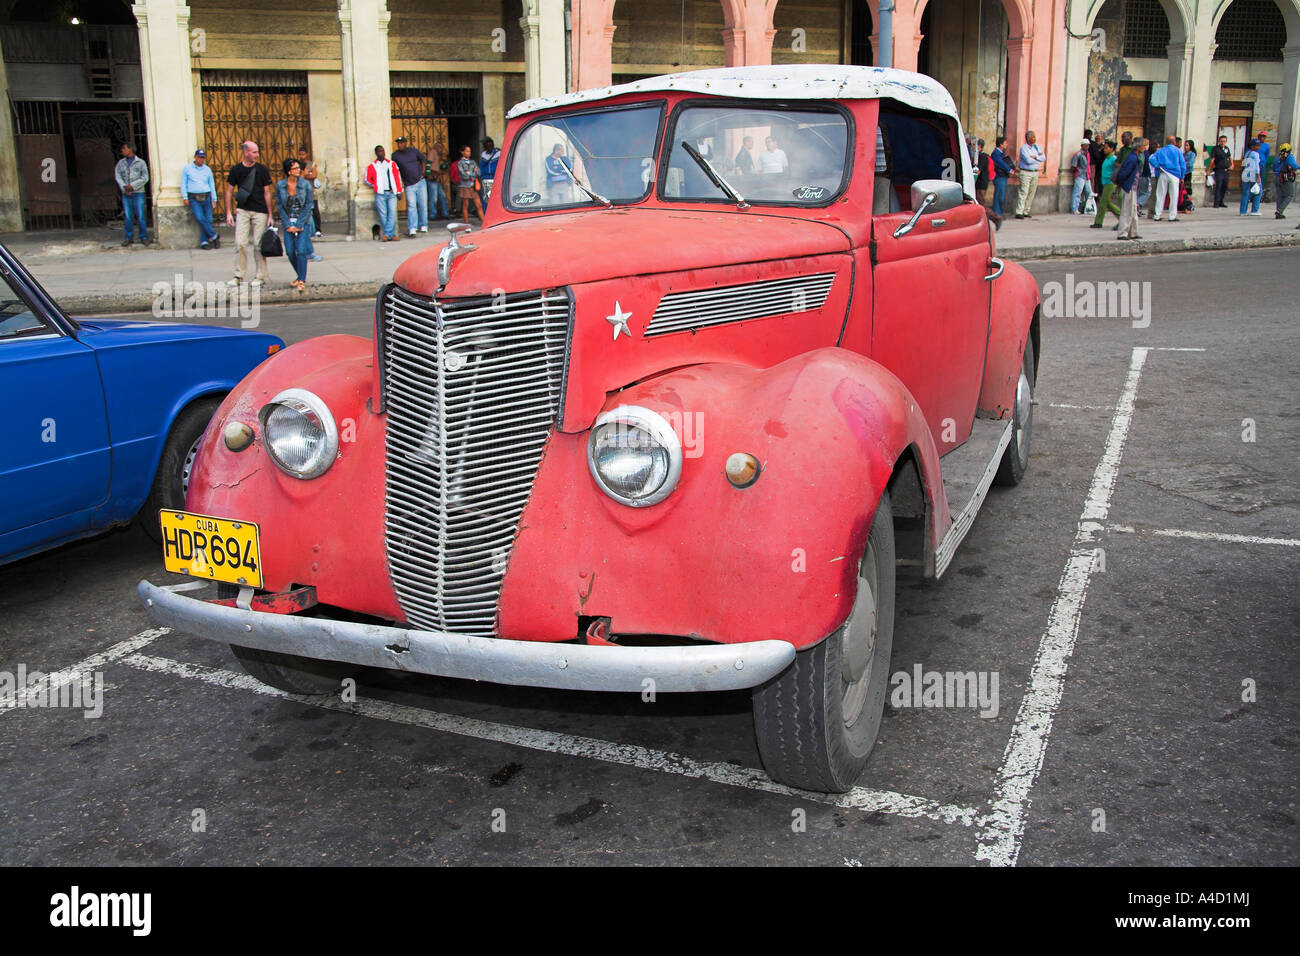 Classic vintage Ford car parked in the street, Havana, La Habana Vieja, Cuba Stock Photo